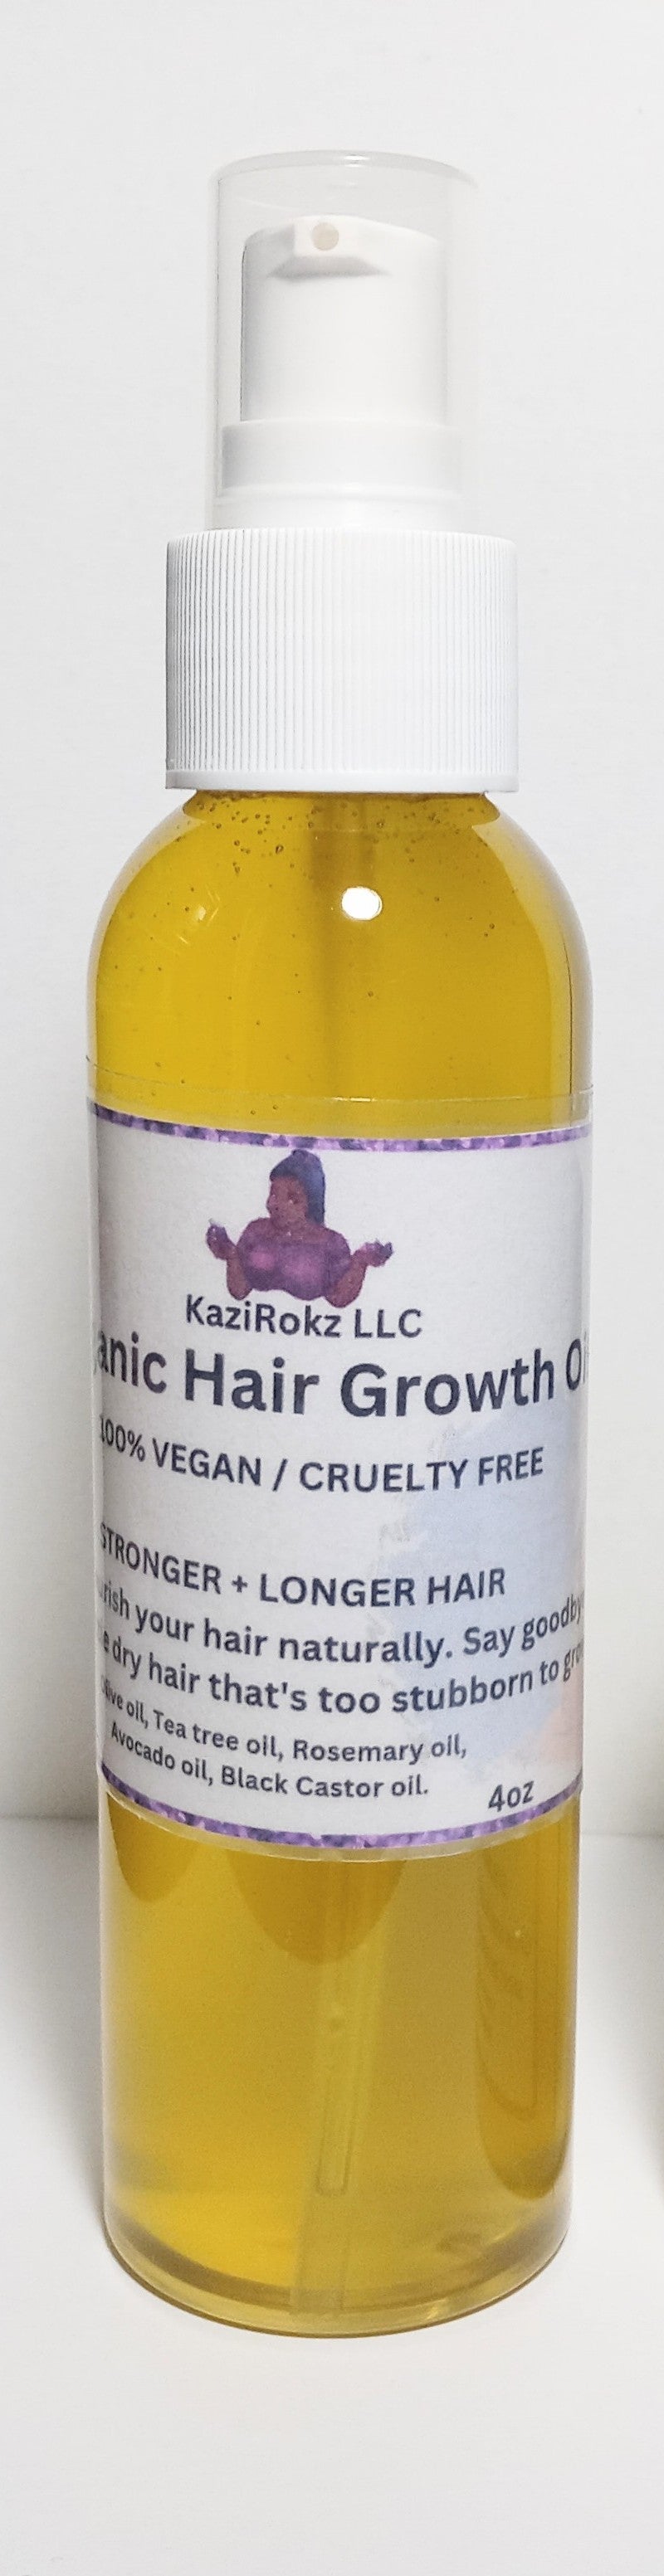 Organic Hair Growth Oil (100% Vegan / Cruelty Free)